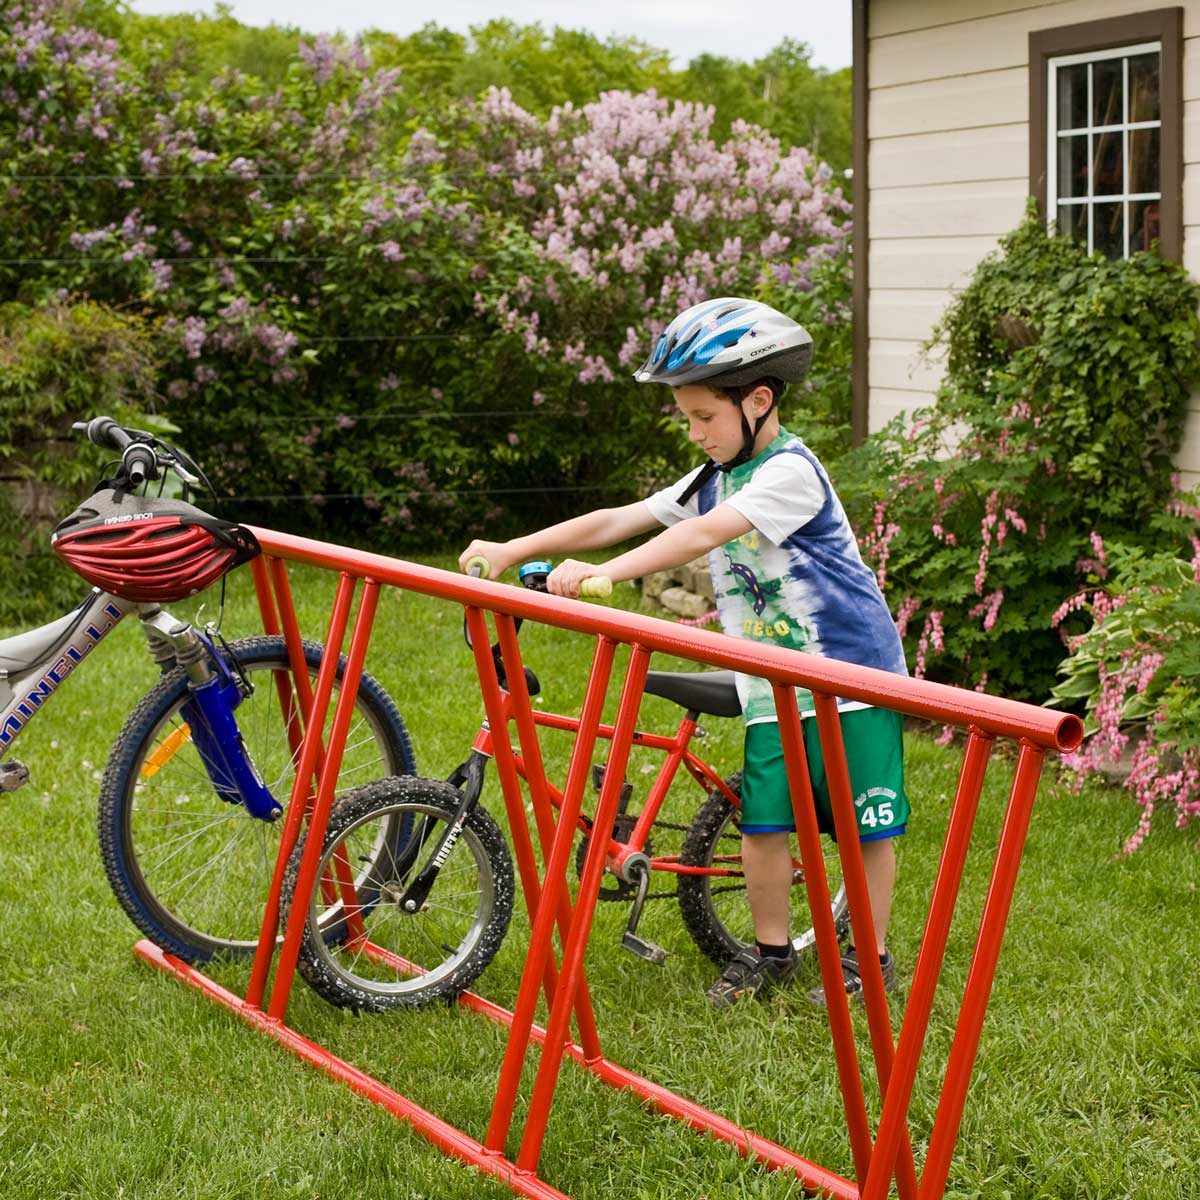 How to Make a Simple Bike Rack